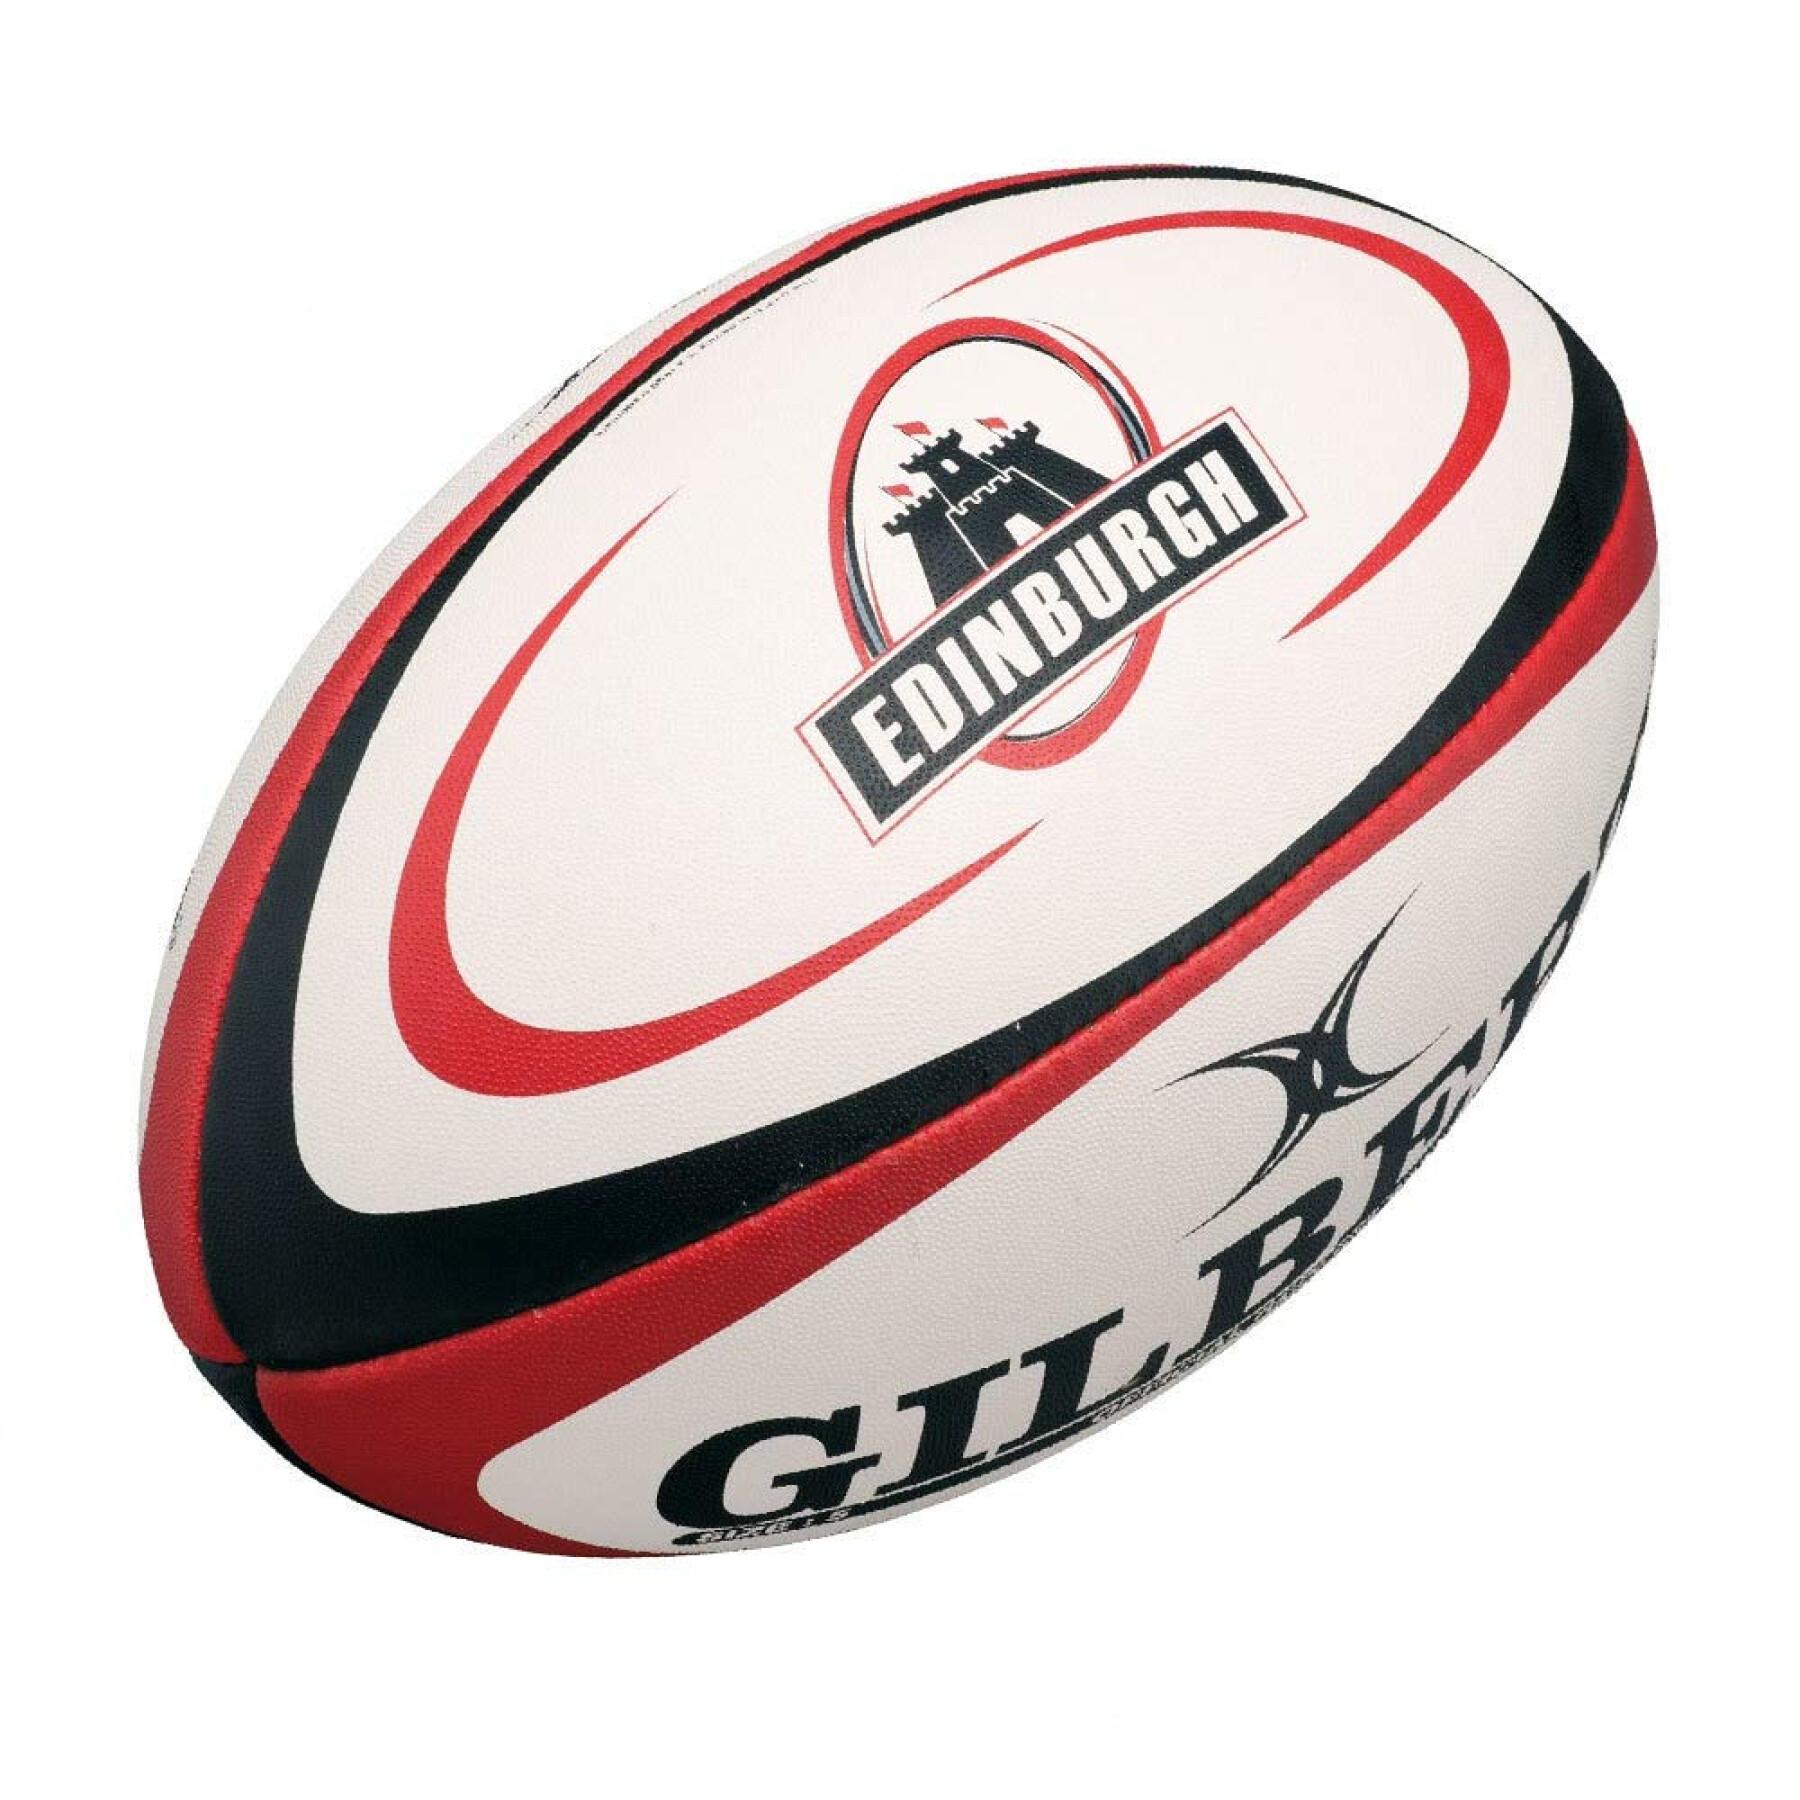 Midi rugby ball Gilbert Edinburgh (size 2)